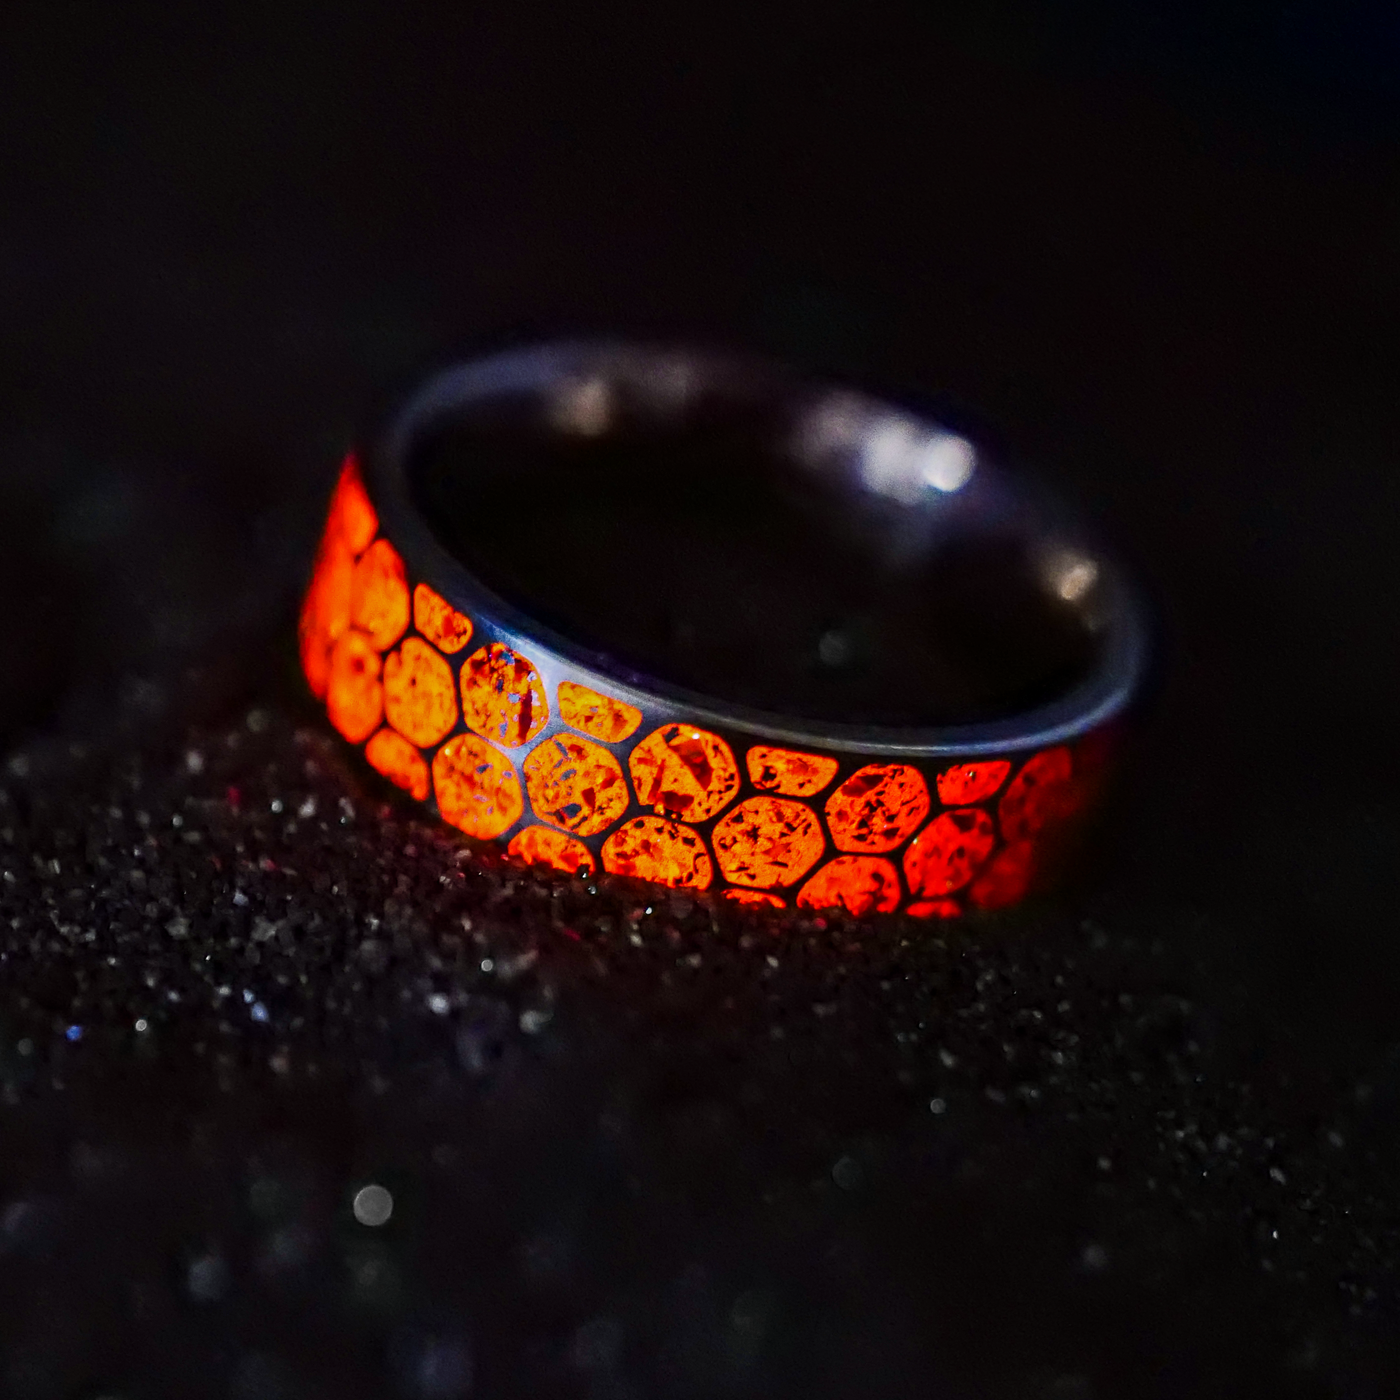 Hexagon Crimson Star Dust™ Ring - Patrick Adair Designs